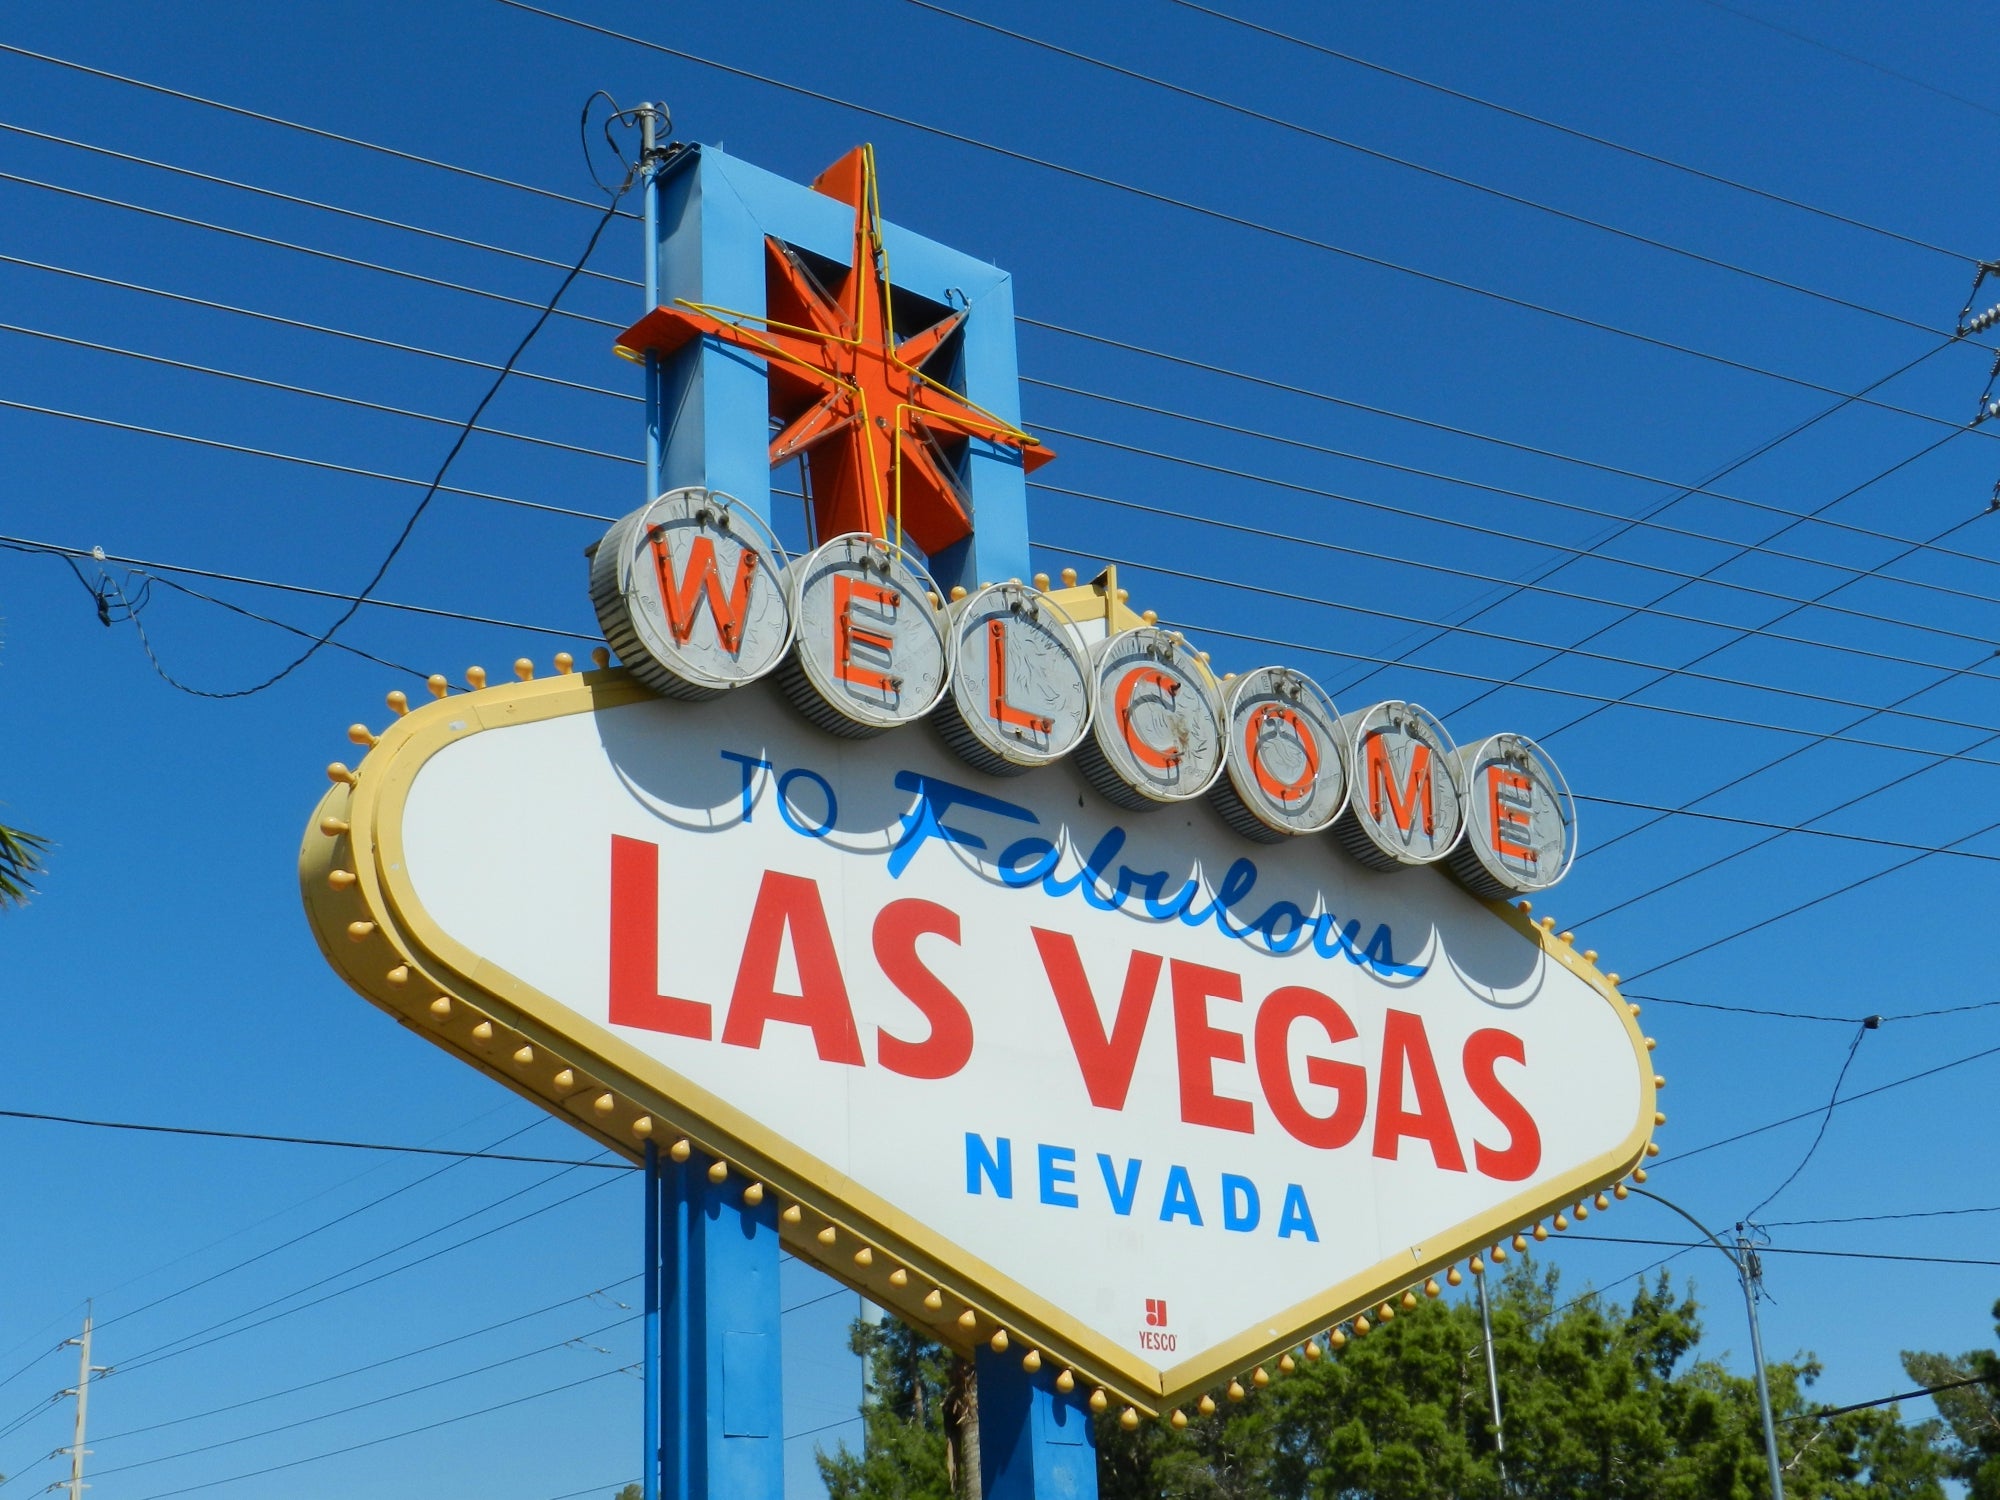 Las Vegas is Nevada's largest city